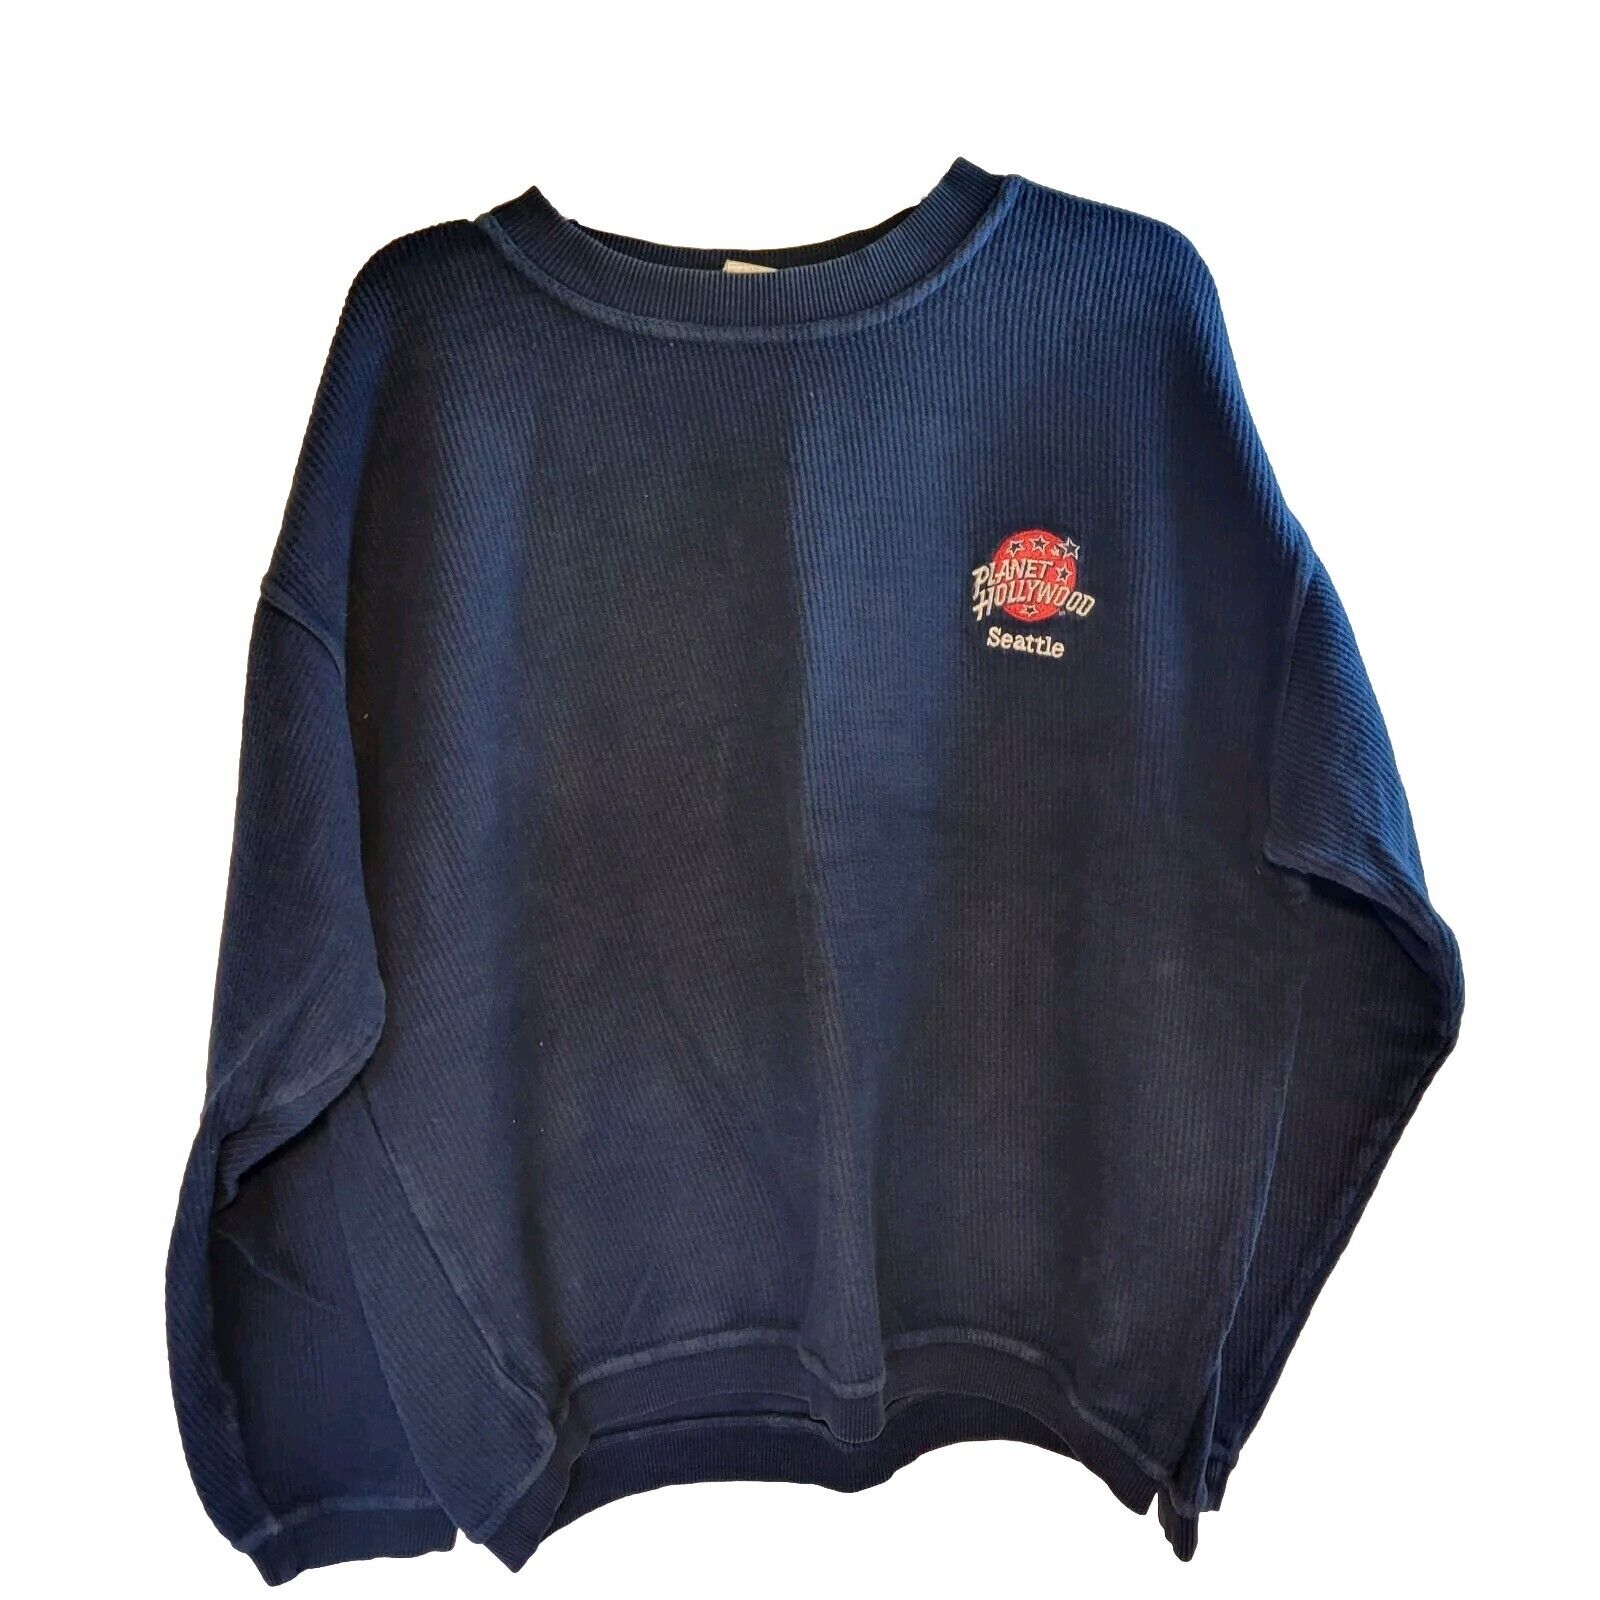 Vintage Planet Hollywood Seattle Sweatshirt Corduroy Crewneck Mens Small Blue